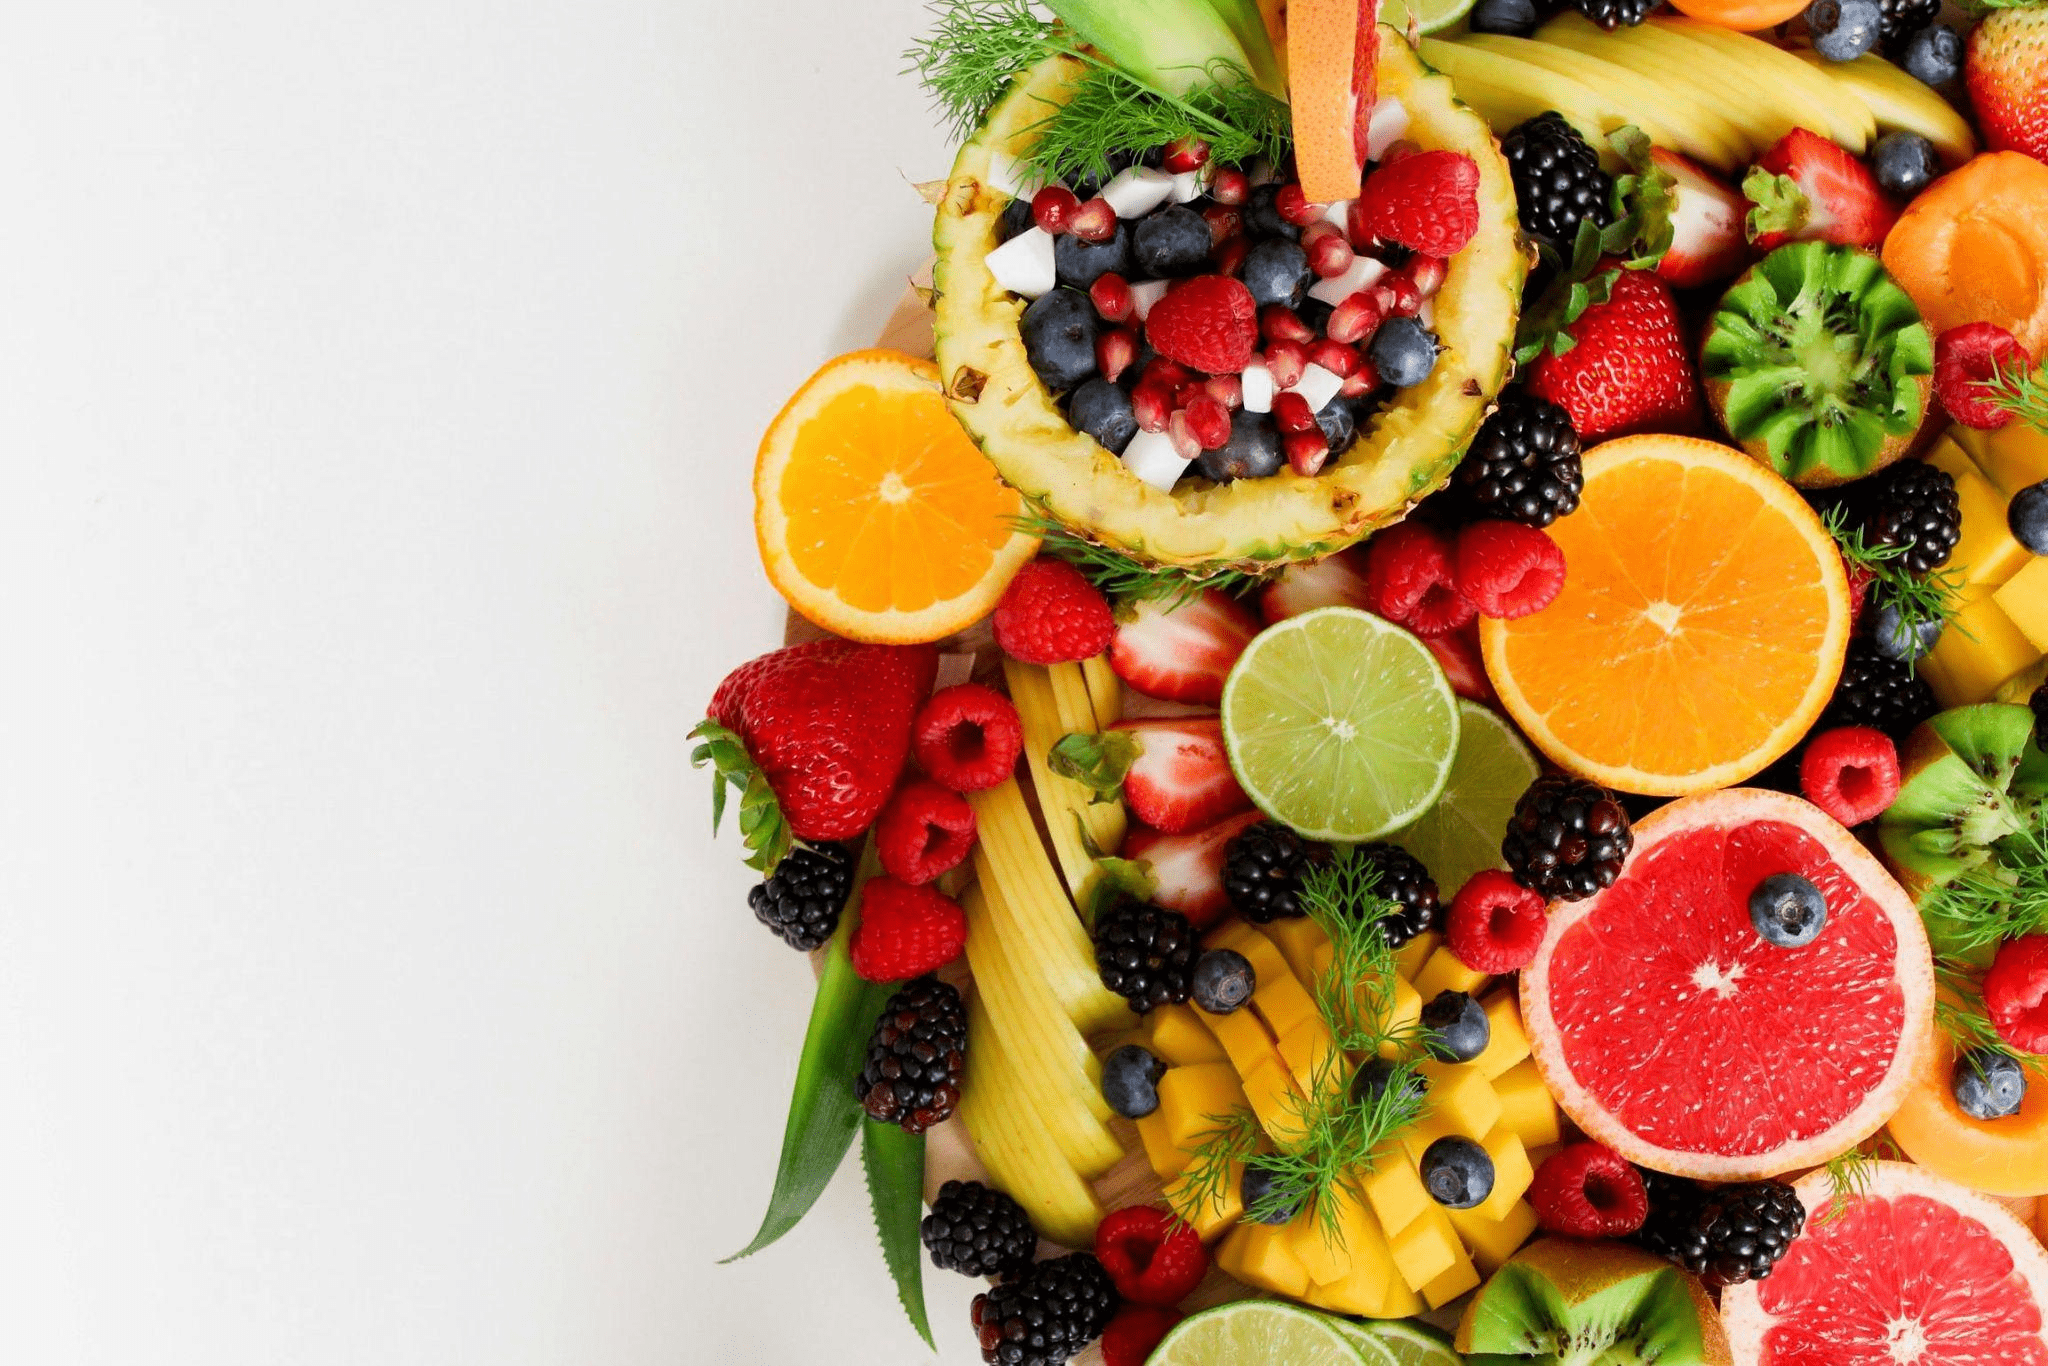 a platter of assorted fruits